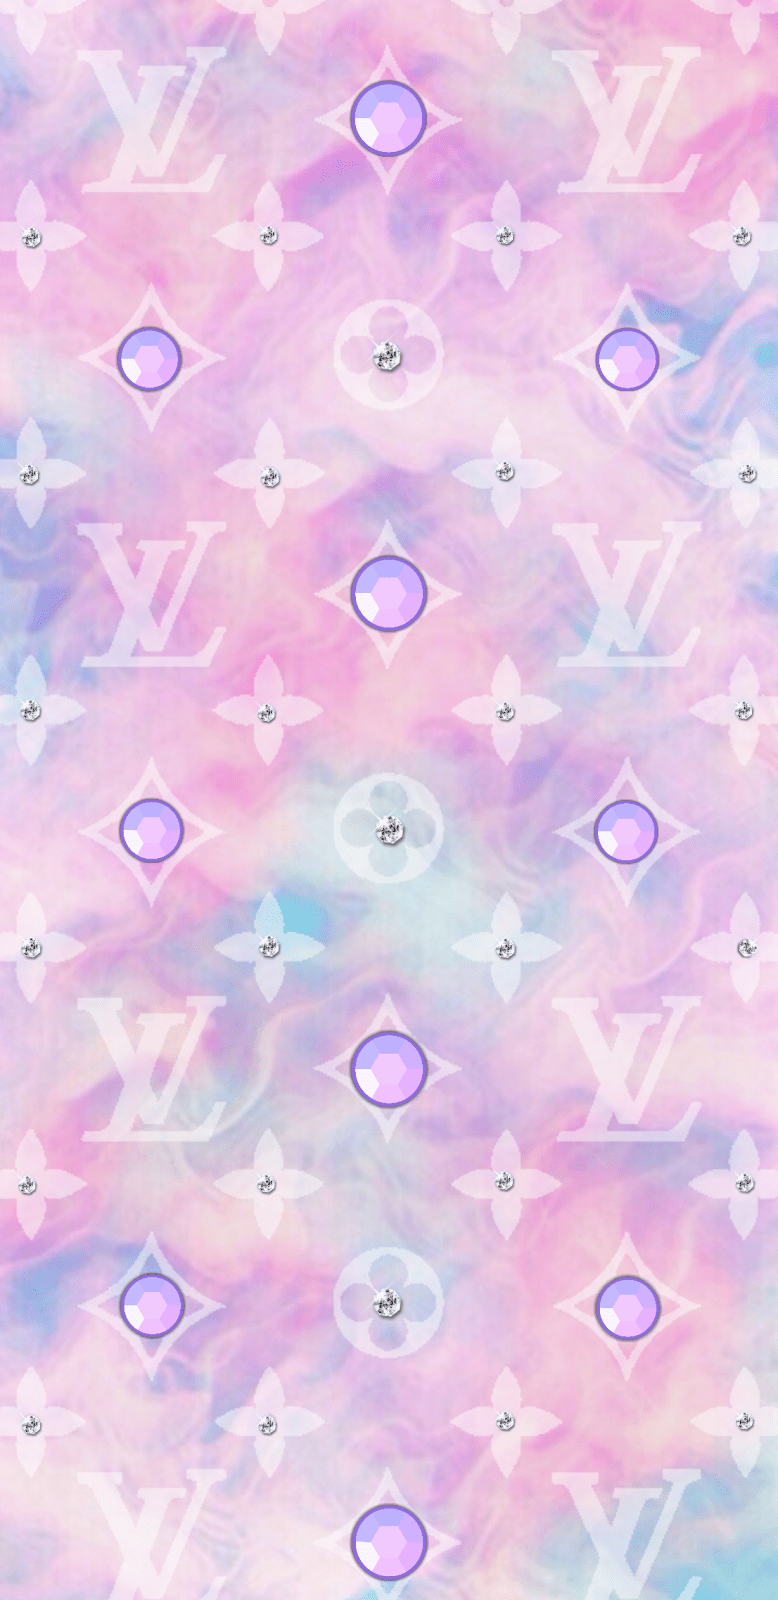 Louis Vuitton Violet wallpaper by timothyczech - Download on ZEDGE